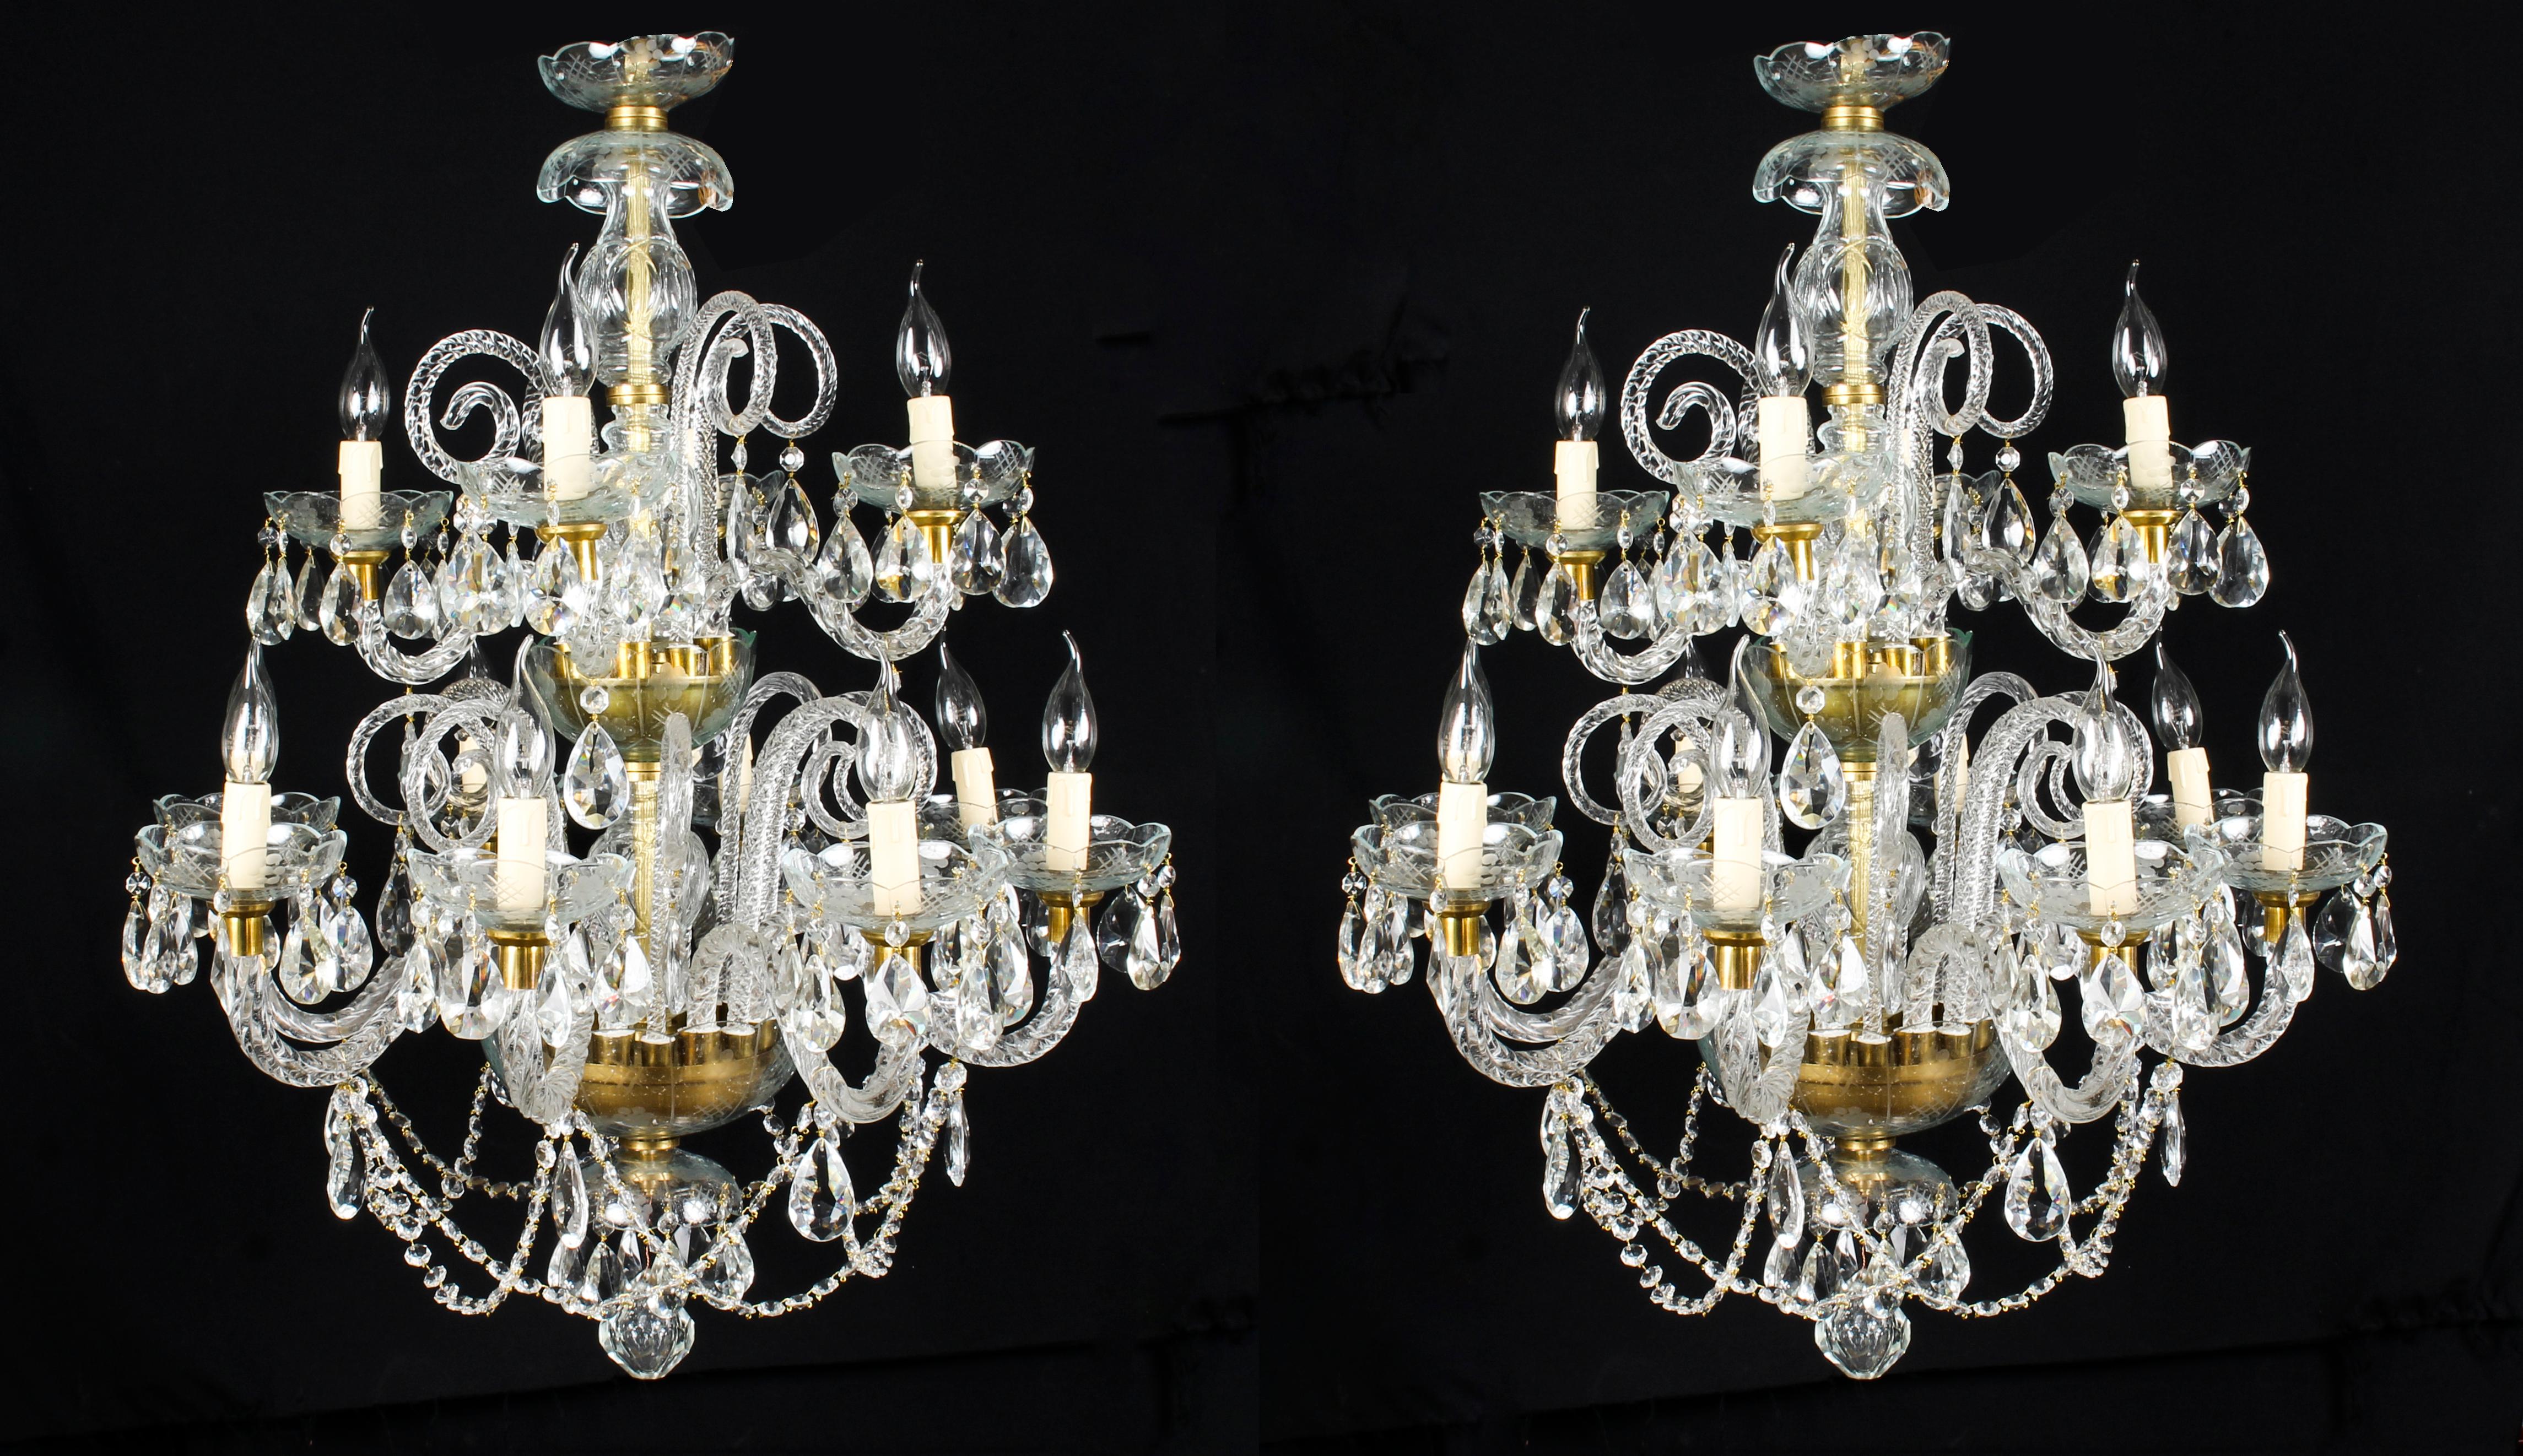 Pair of Vintage Venetian 12 Light Crystal Chandeliers 20th Century For Sale 8